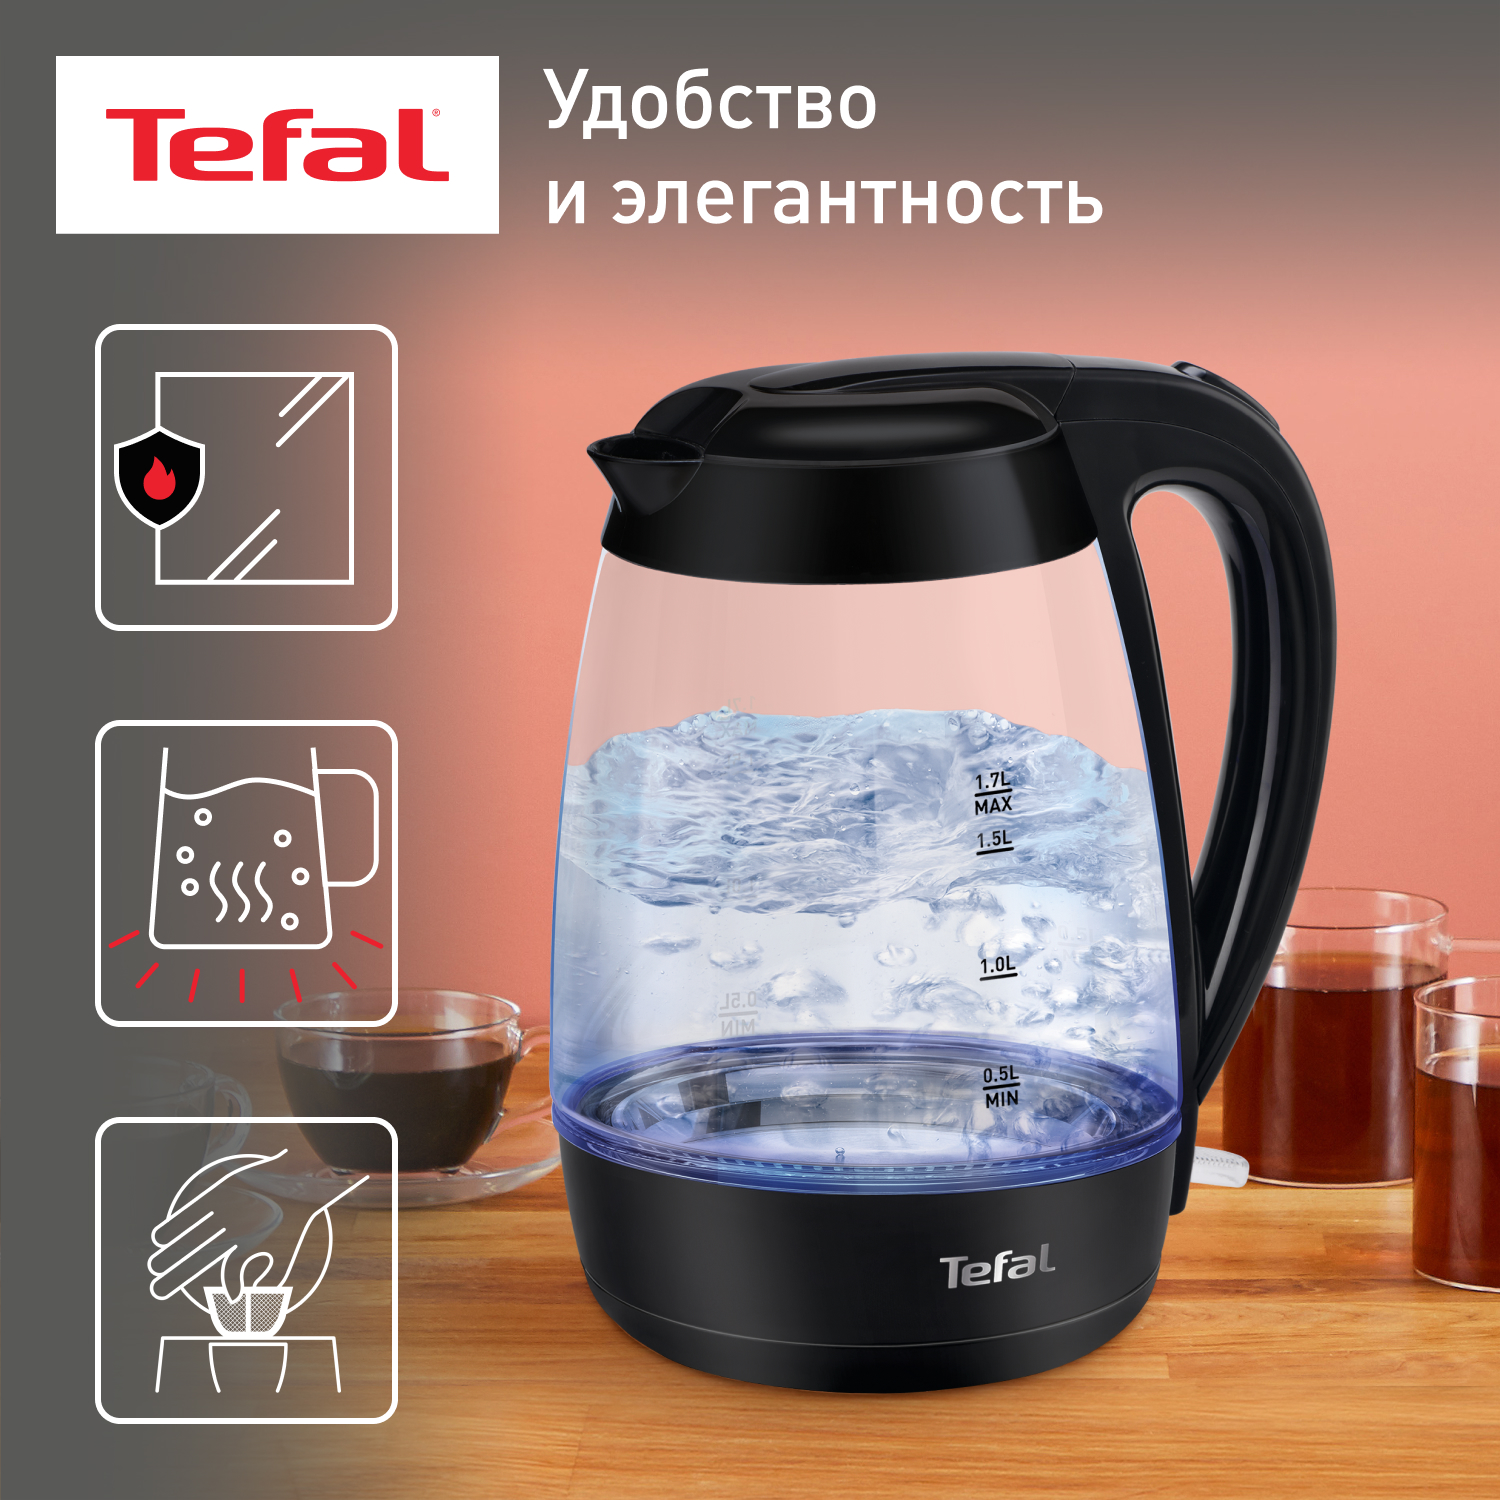 Чайник электрический Tefal Glass KO450832, 1.7 л, черный чайник электрический zelmer zck8011i glass ivory